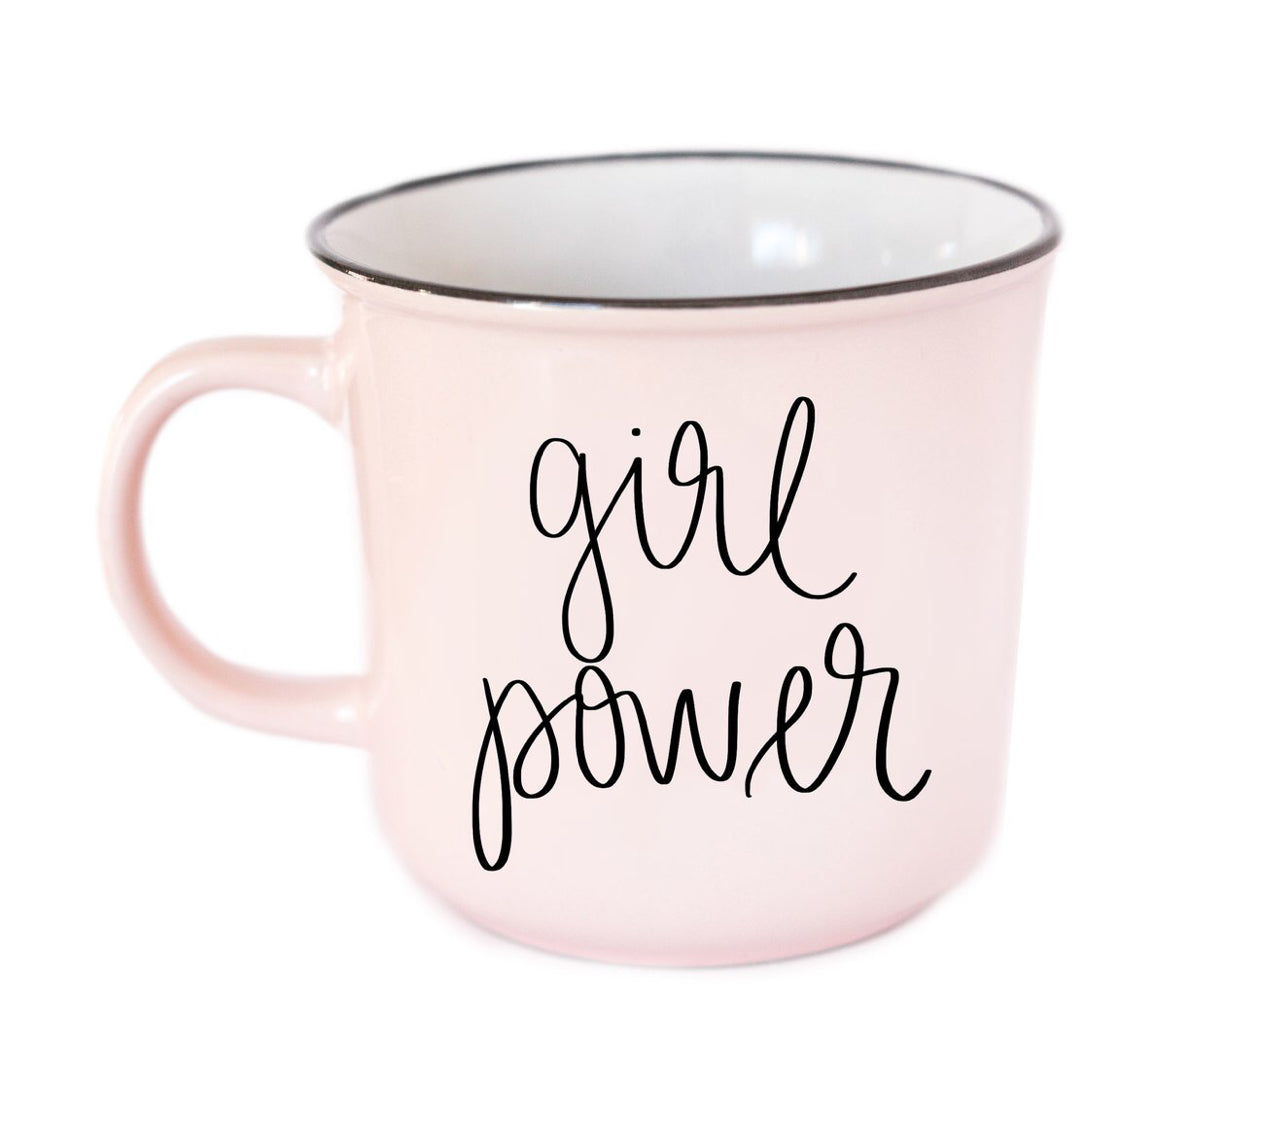 "Girl Power" Campfire Mug